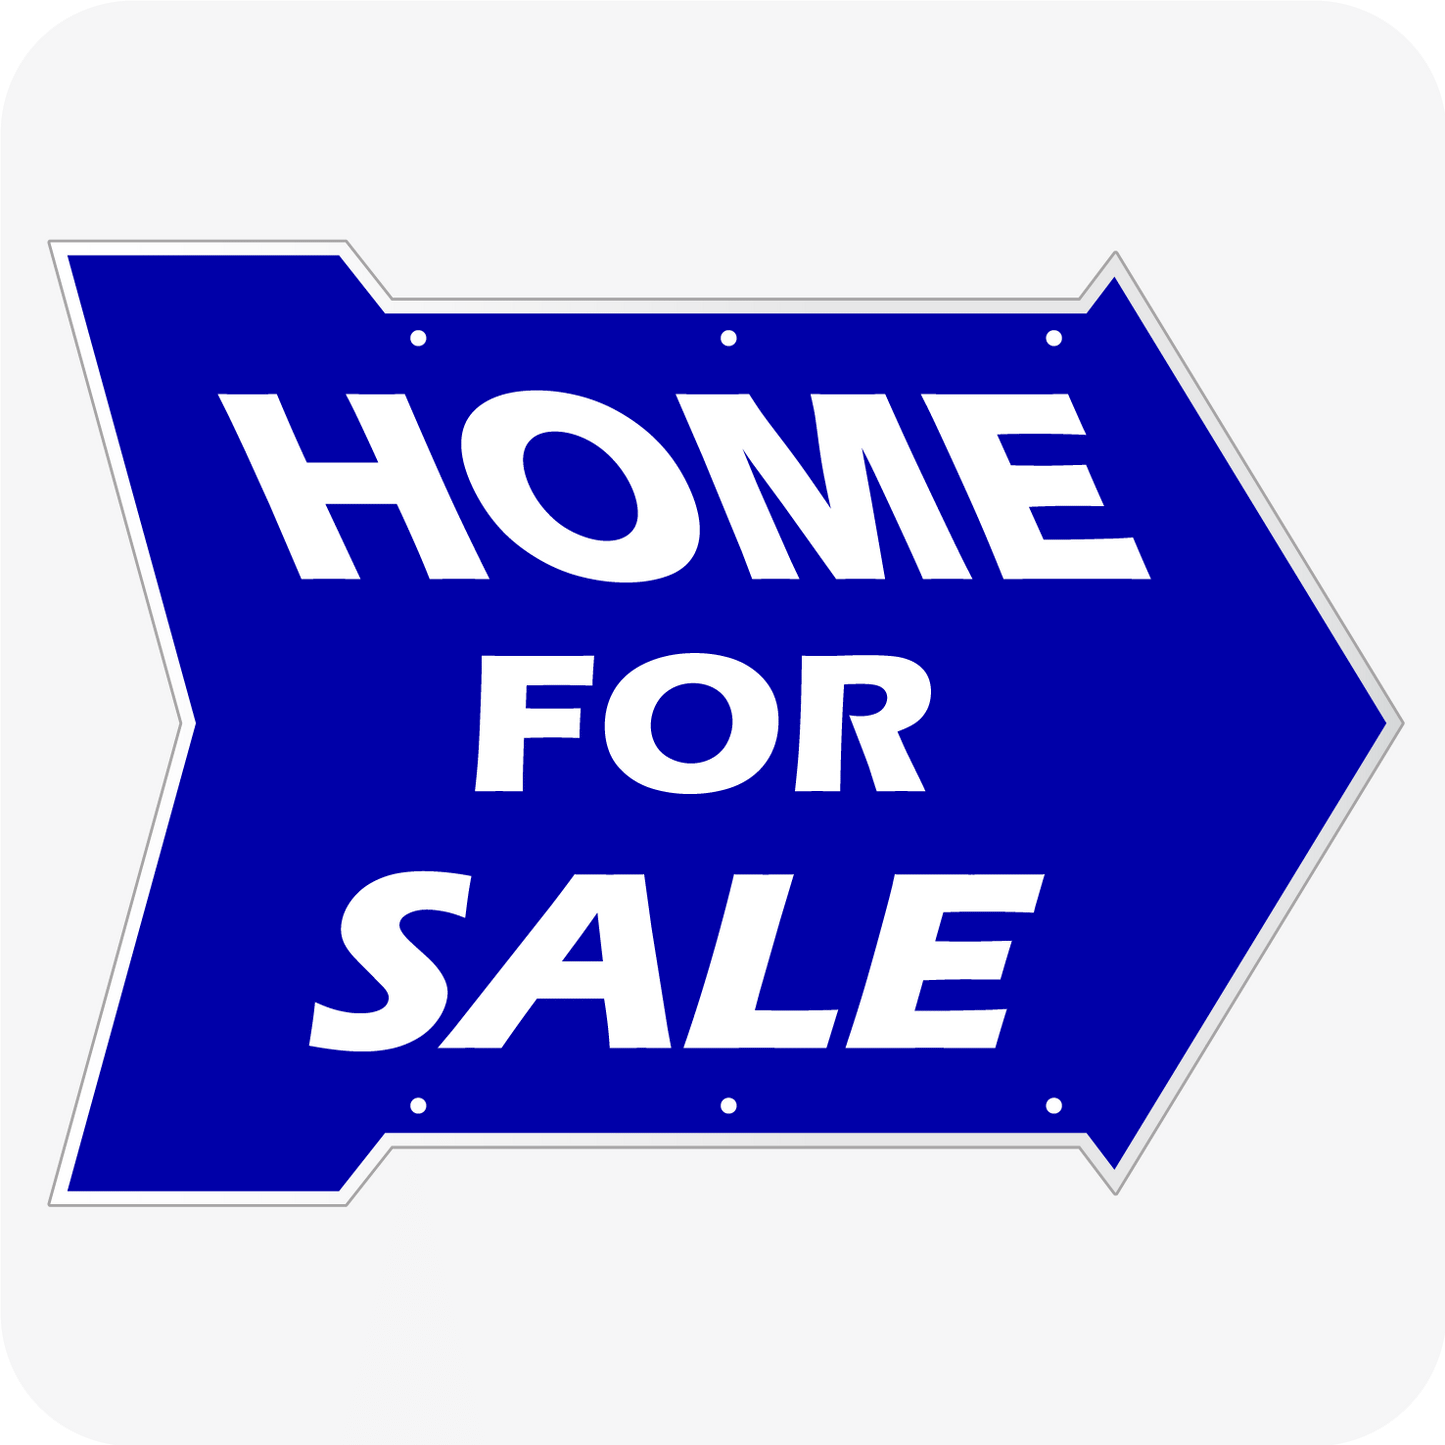 Home for Sale Arrow 18 x 24 - Blue